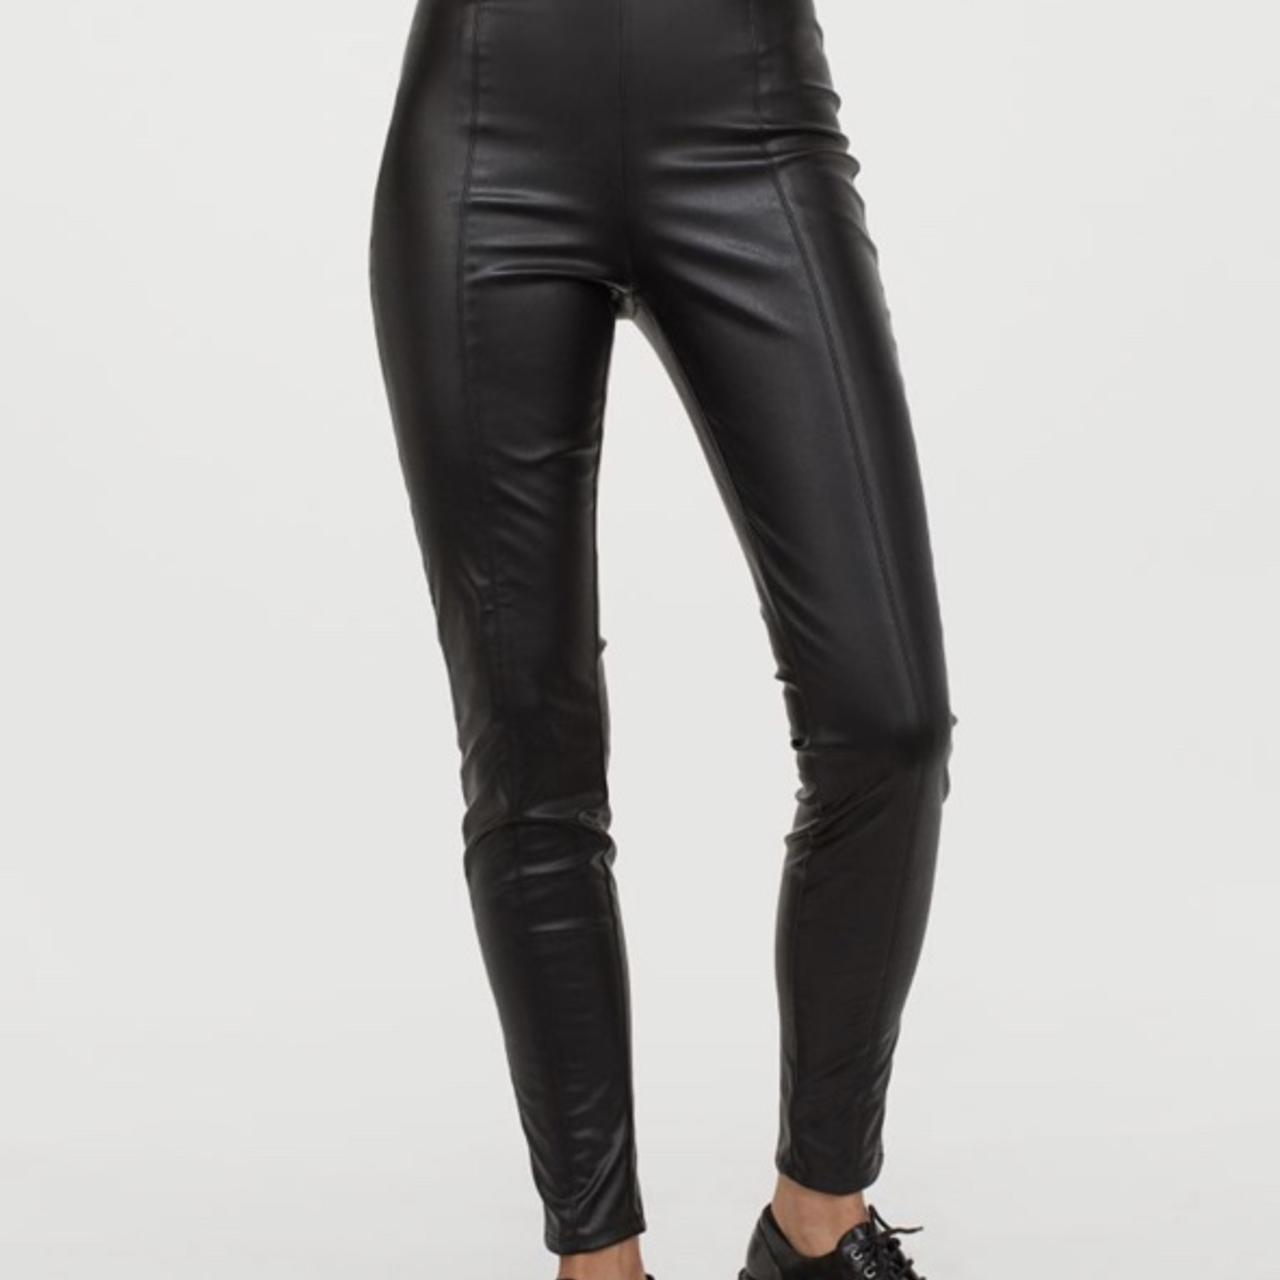 H&M imitation leather leggings. Really flattering